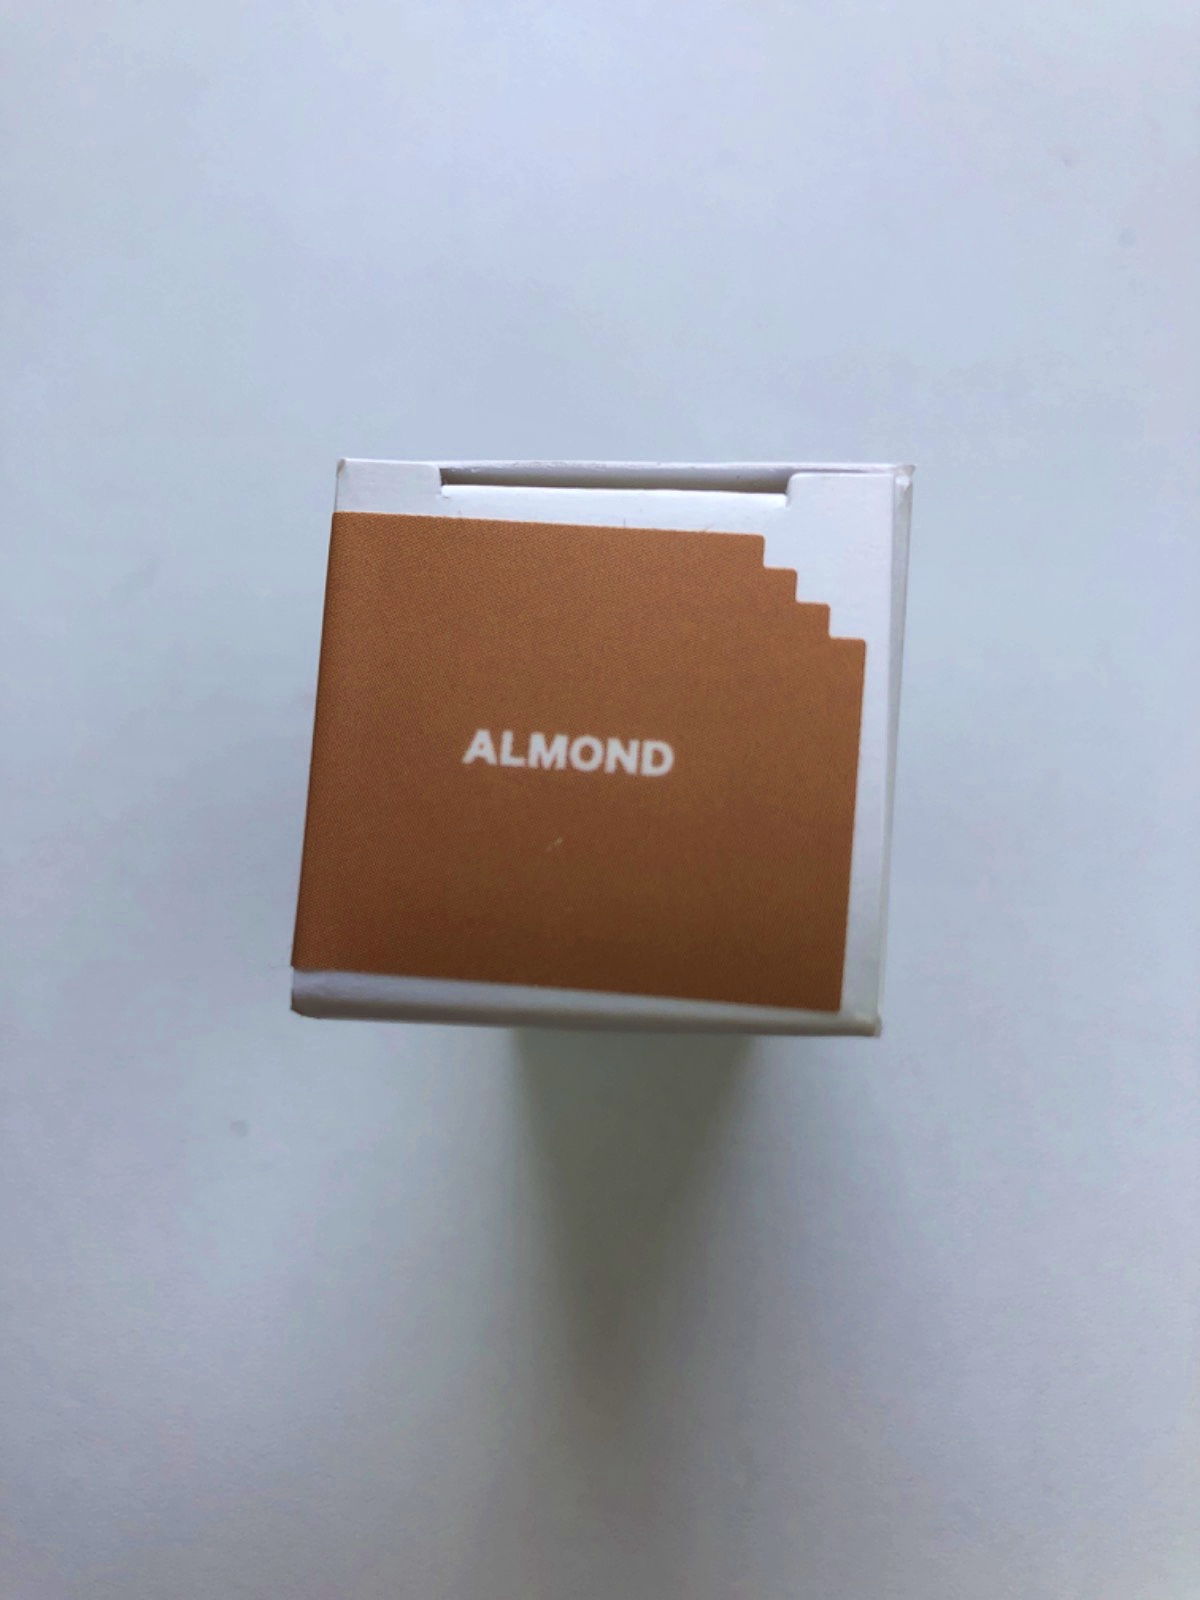 Milk Makeup Flex Foundation Stick Almond 10g